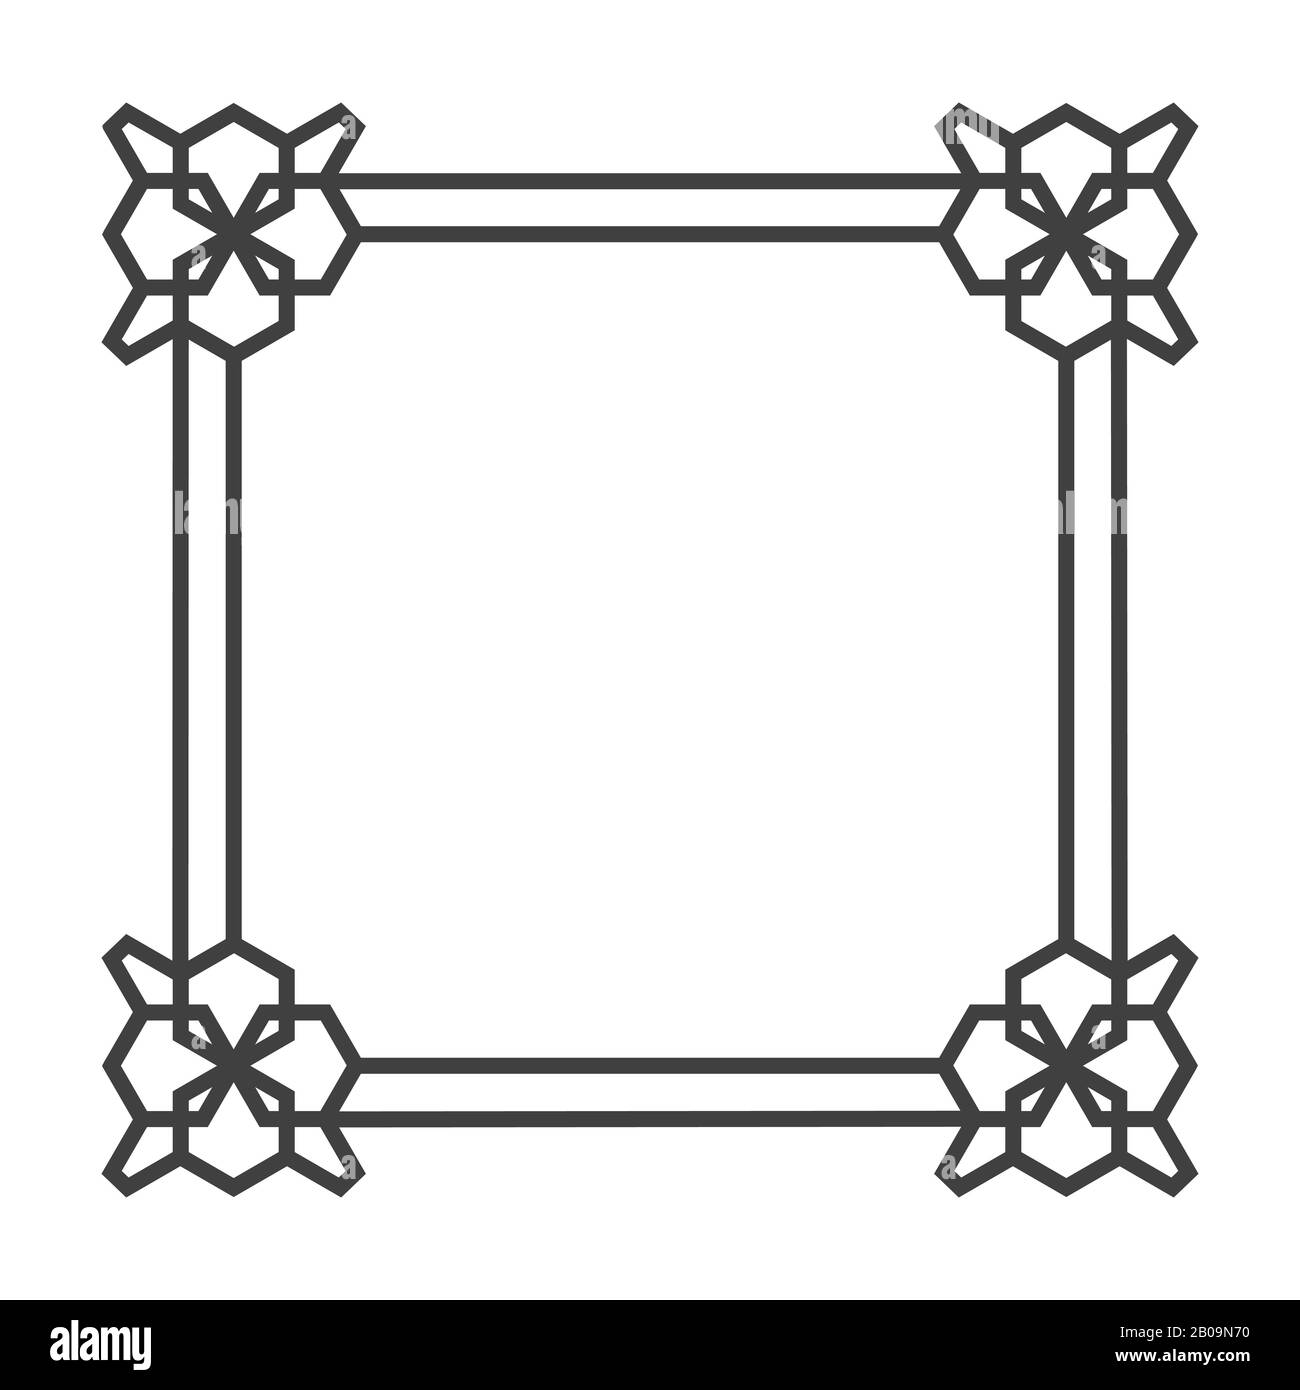 Square asian vector retro frame in black and white. Illustration of ornament Stock Vector